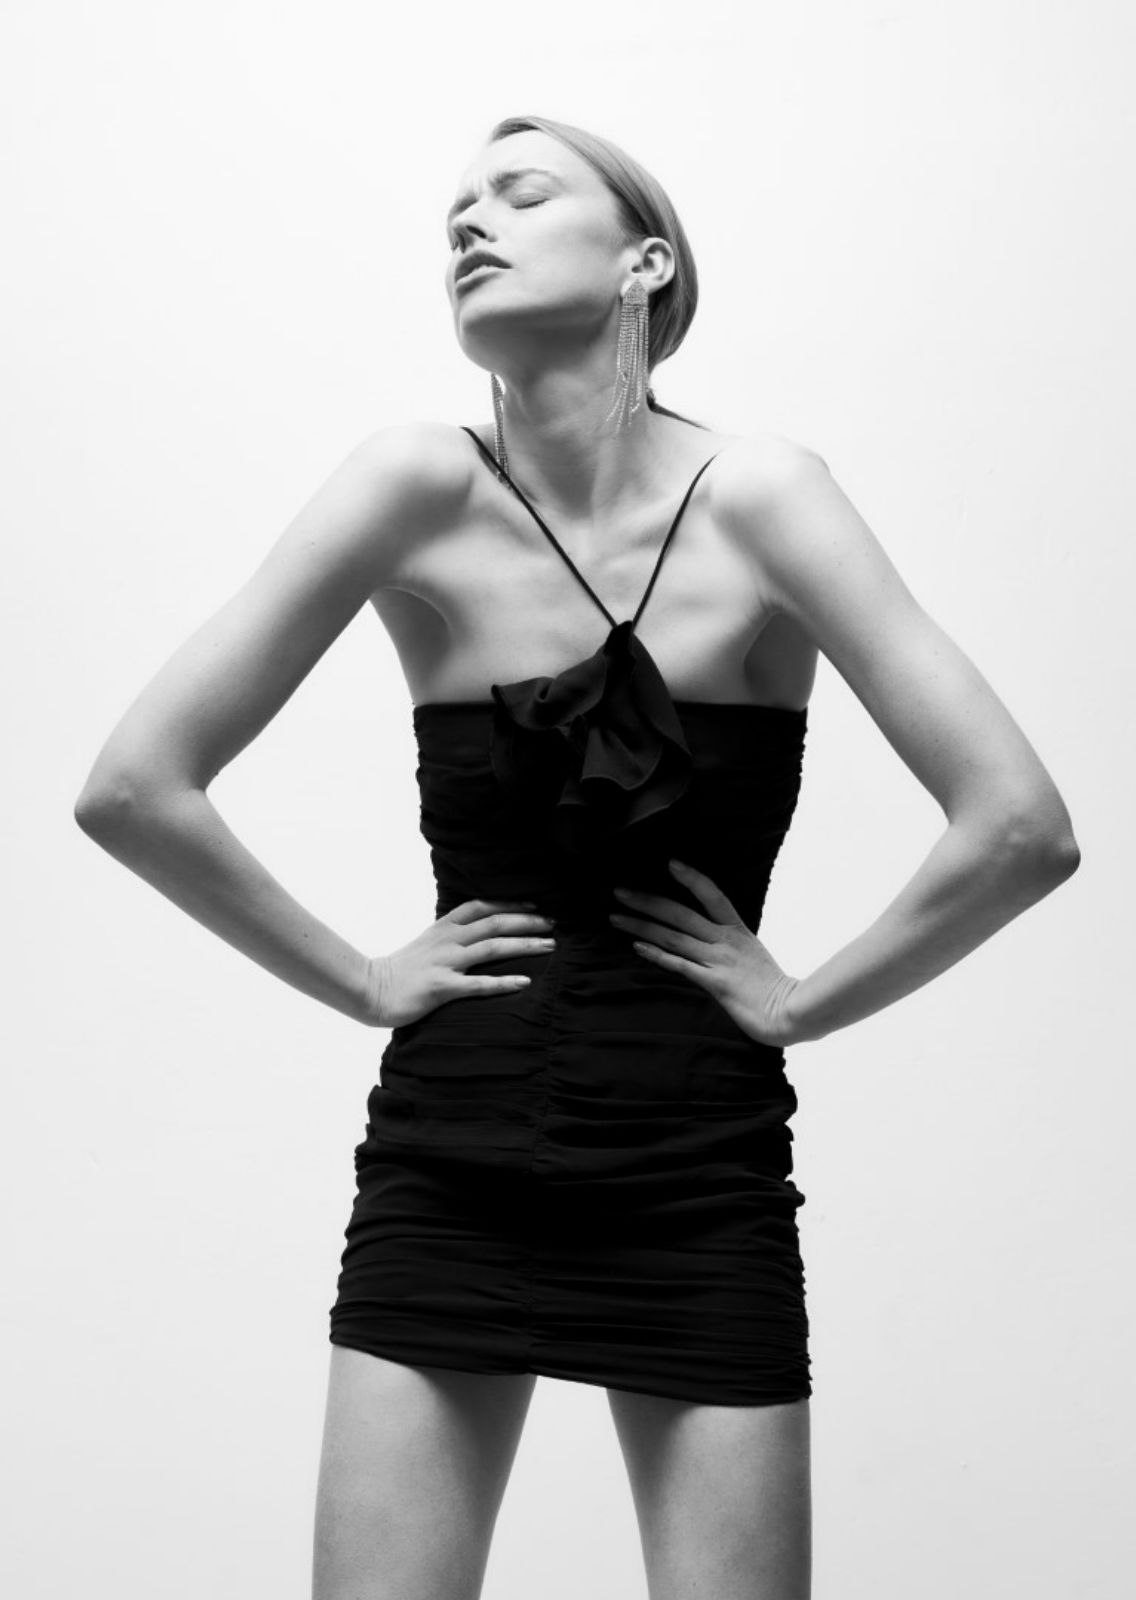 MAGDA MAYER. Carmen Duran Model Agency.